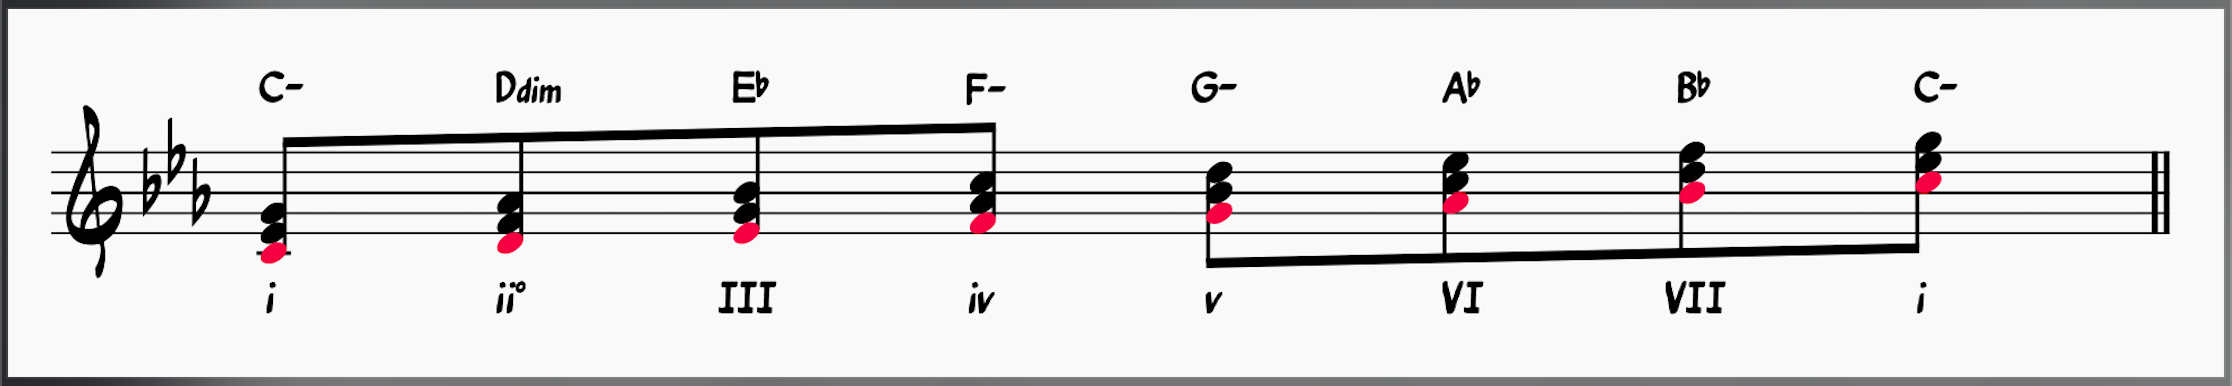 Chords in C Aeolian